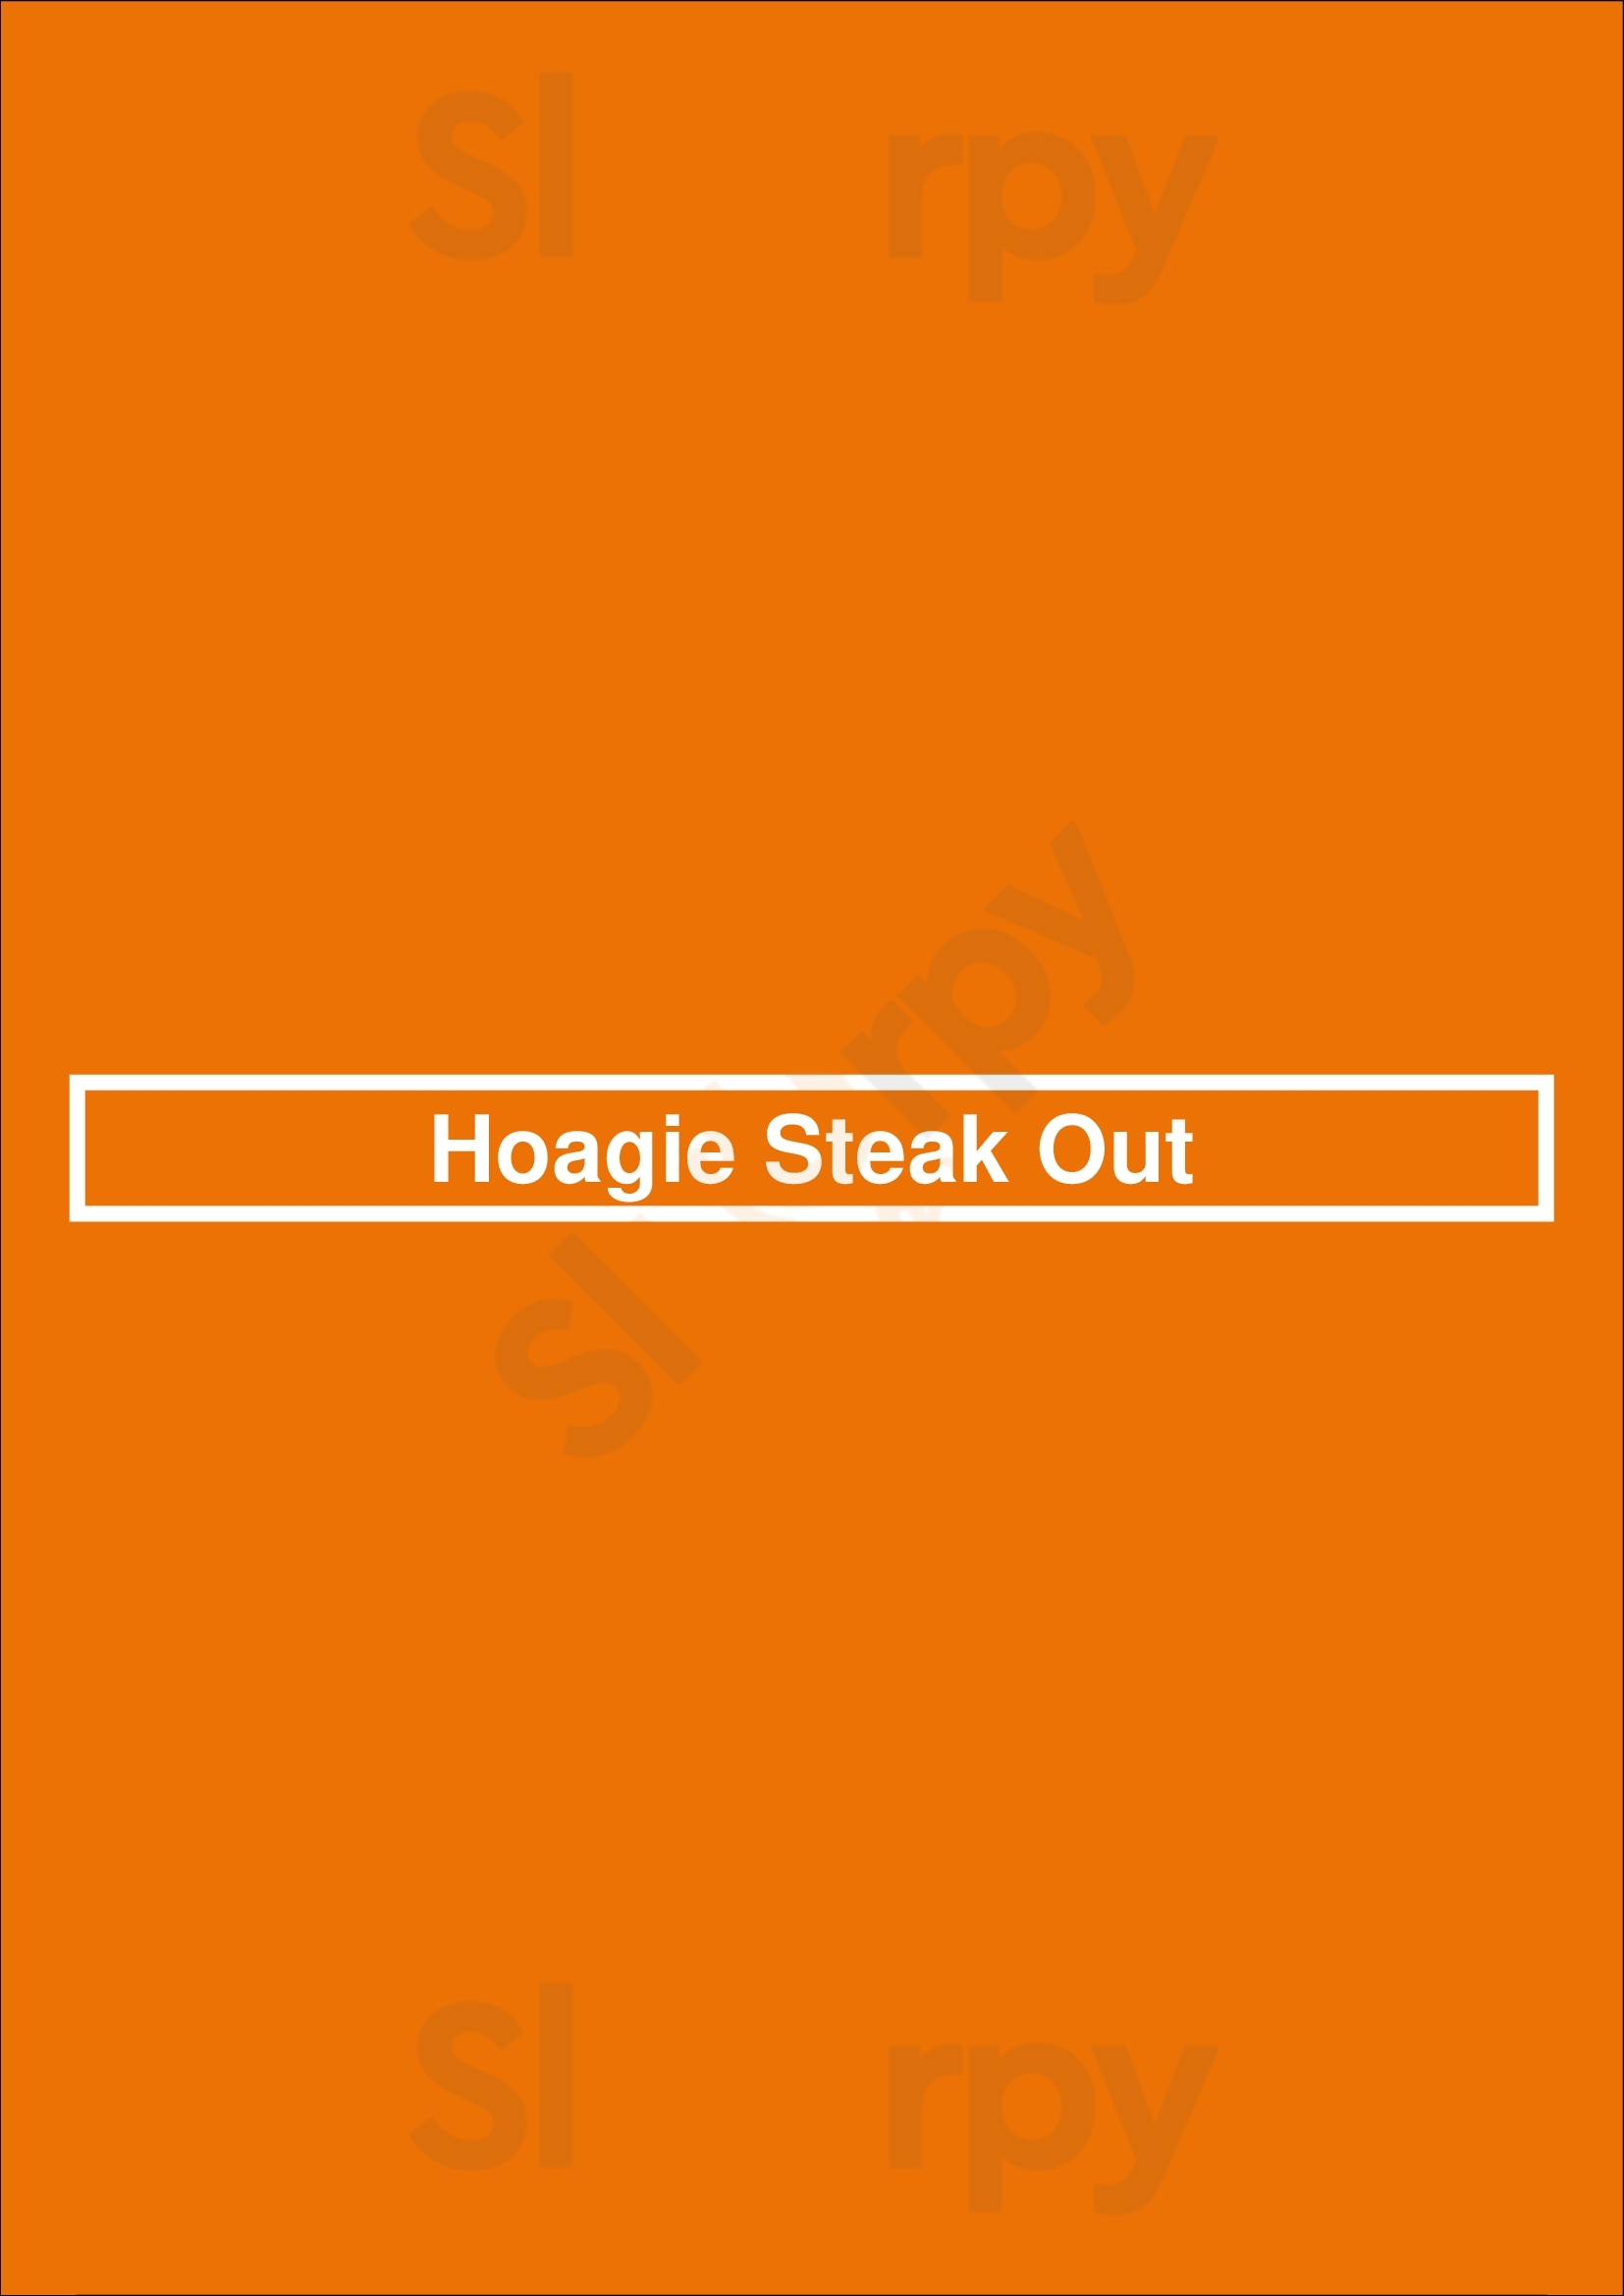 Hoagie Steak Out San Jose Menu - 1